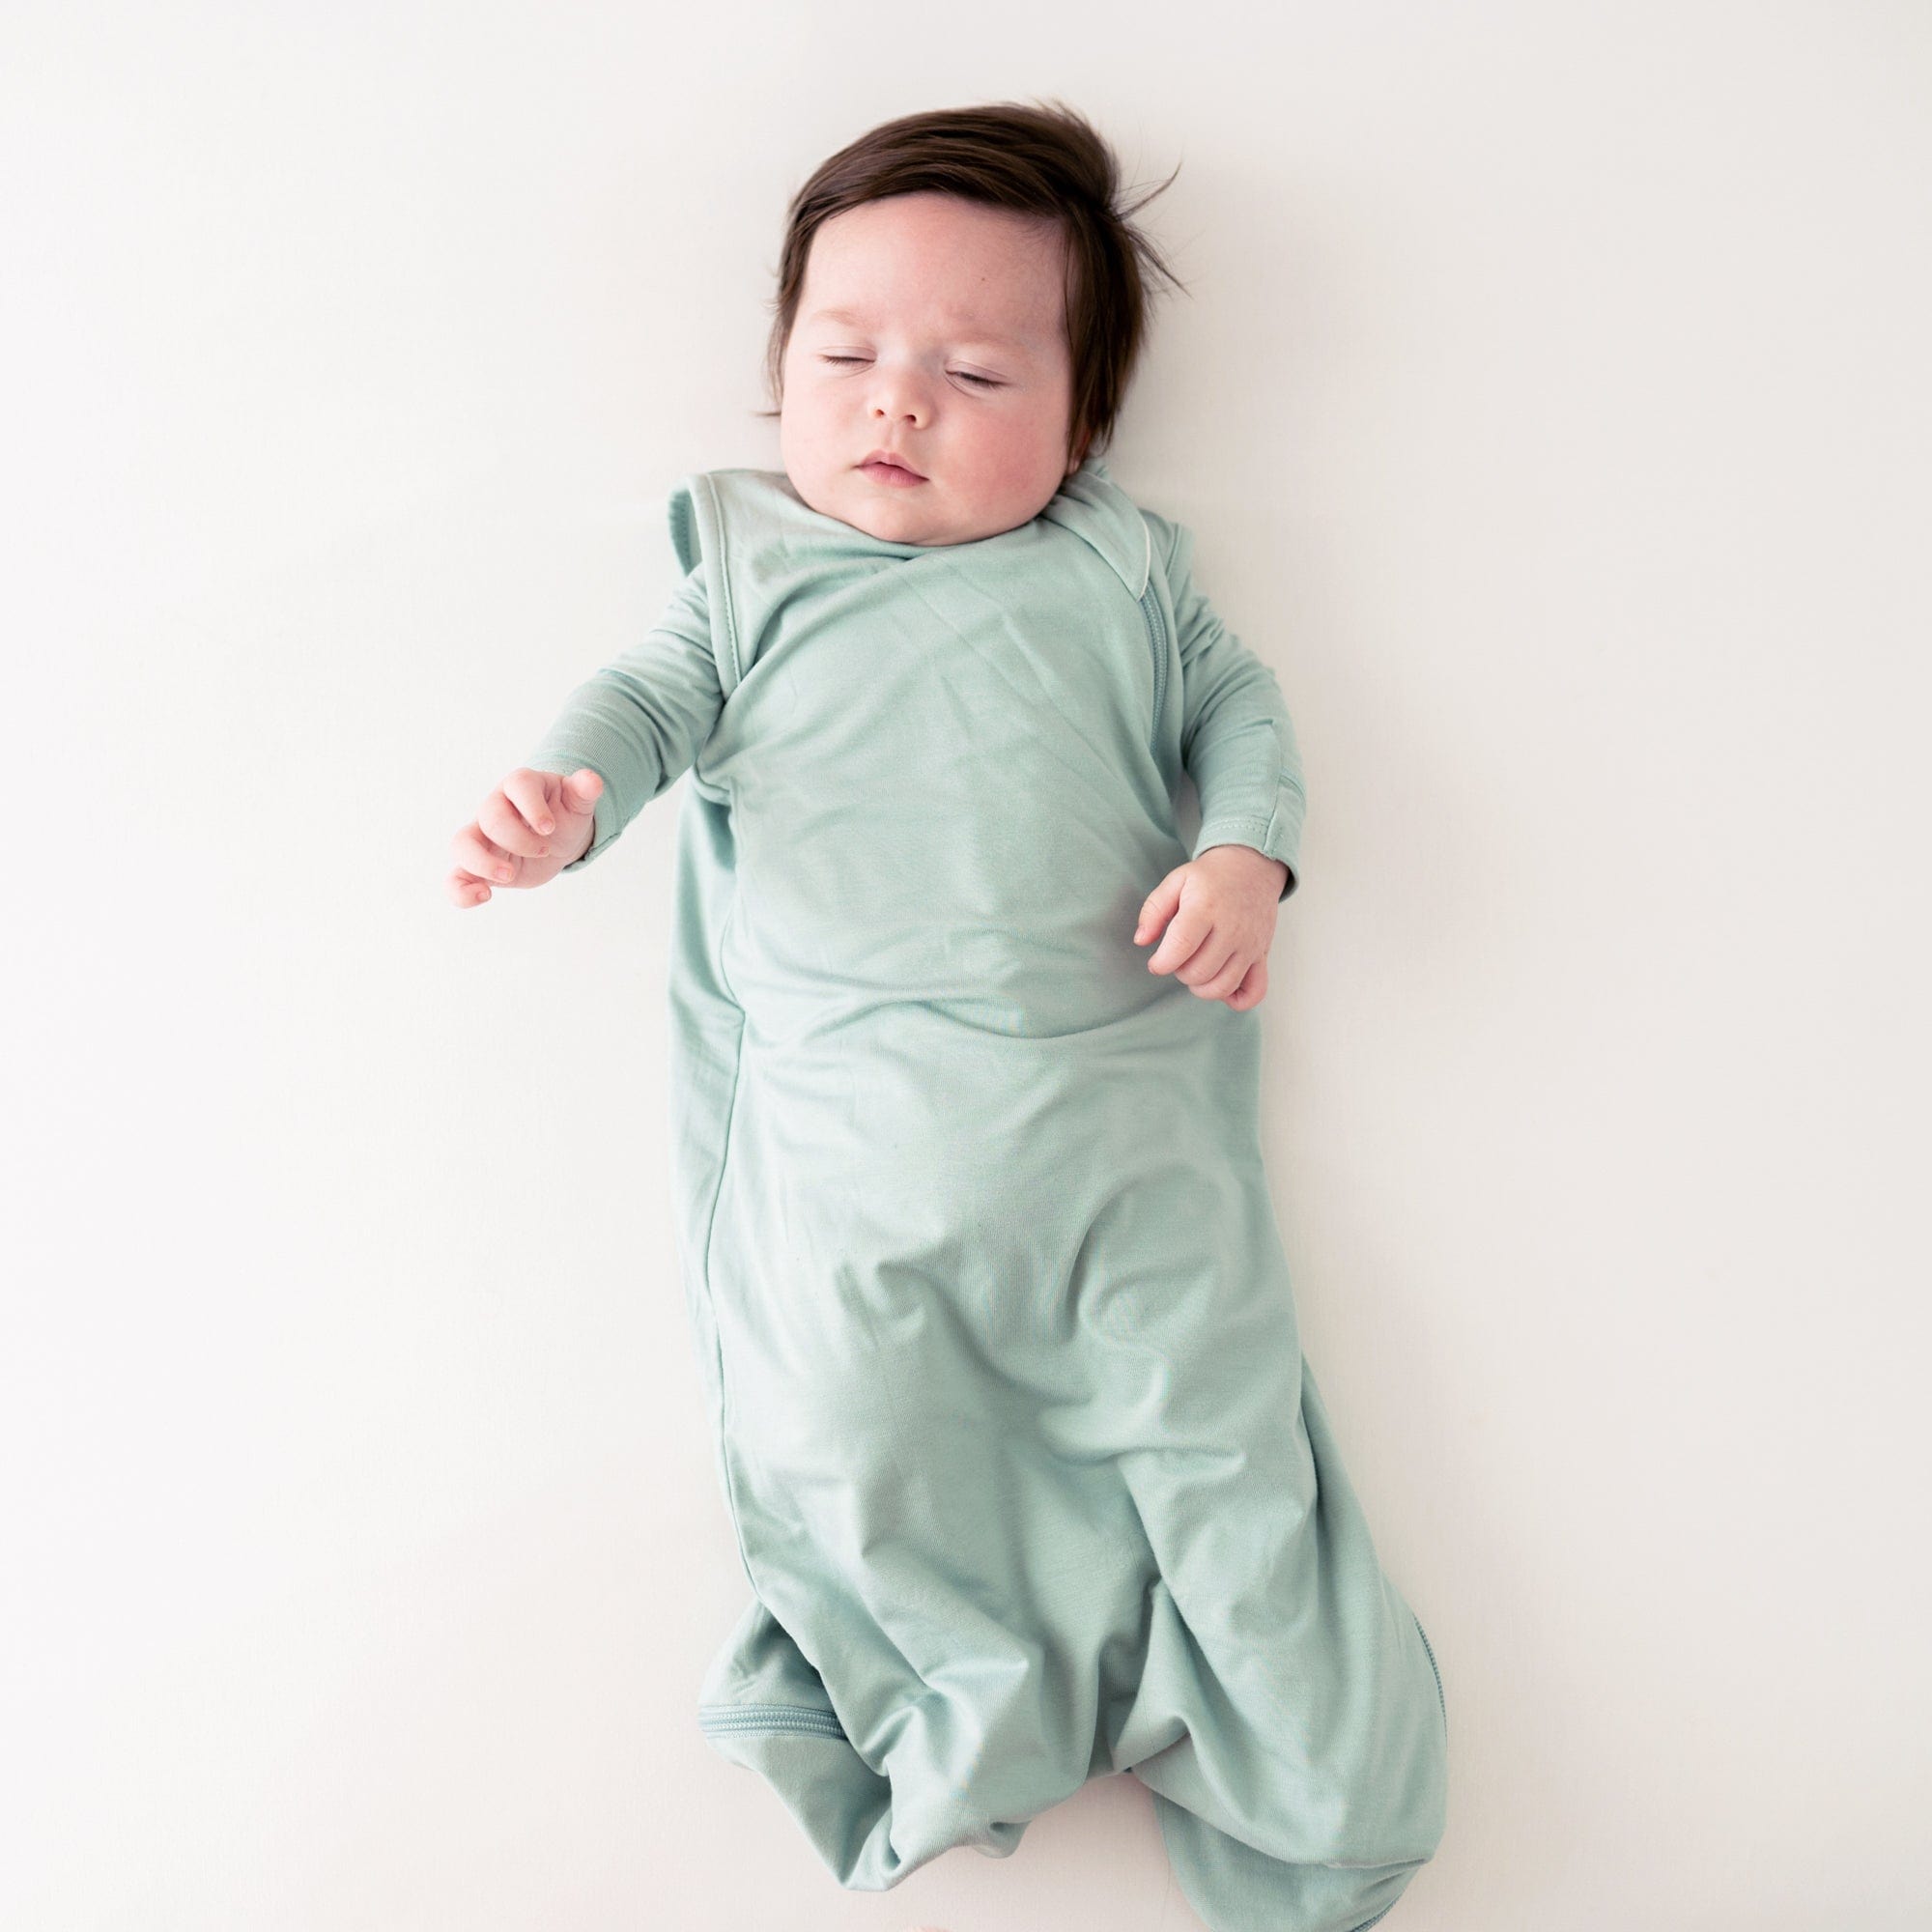 Baby wearing Kyte Baby bamboo Sleep Bag in Sage 0.5